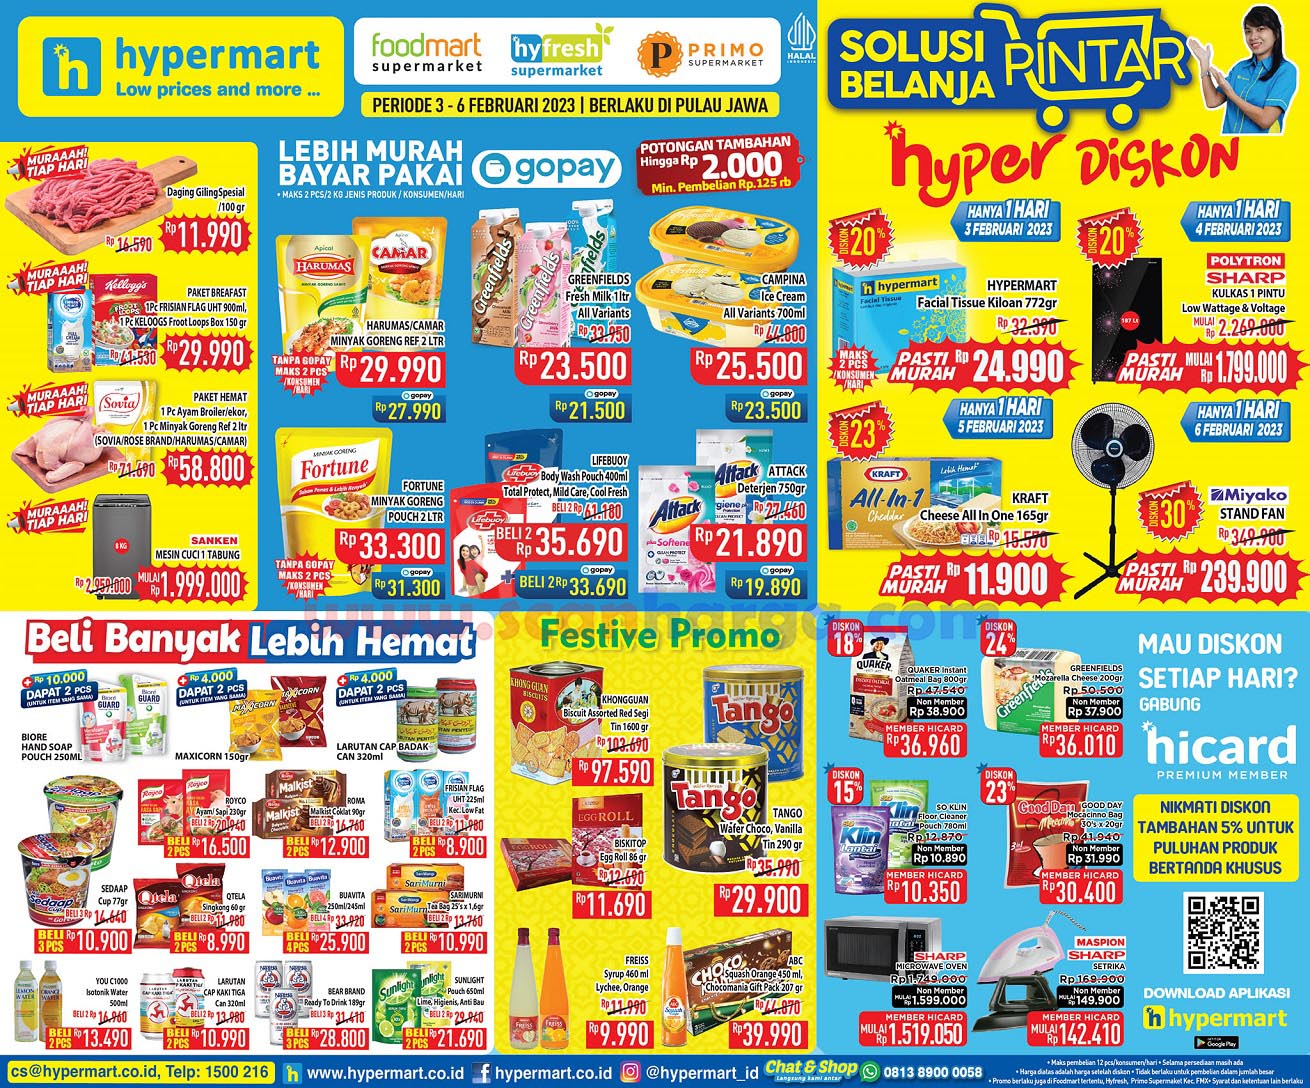 Katalog Promo Hypermart Weekend Periode 3 - 6 Februari 2023